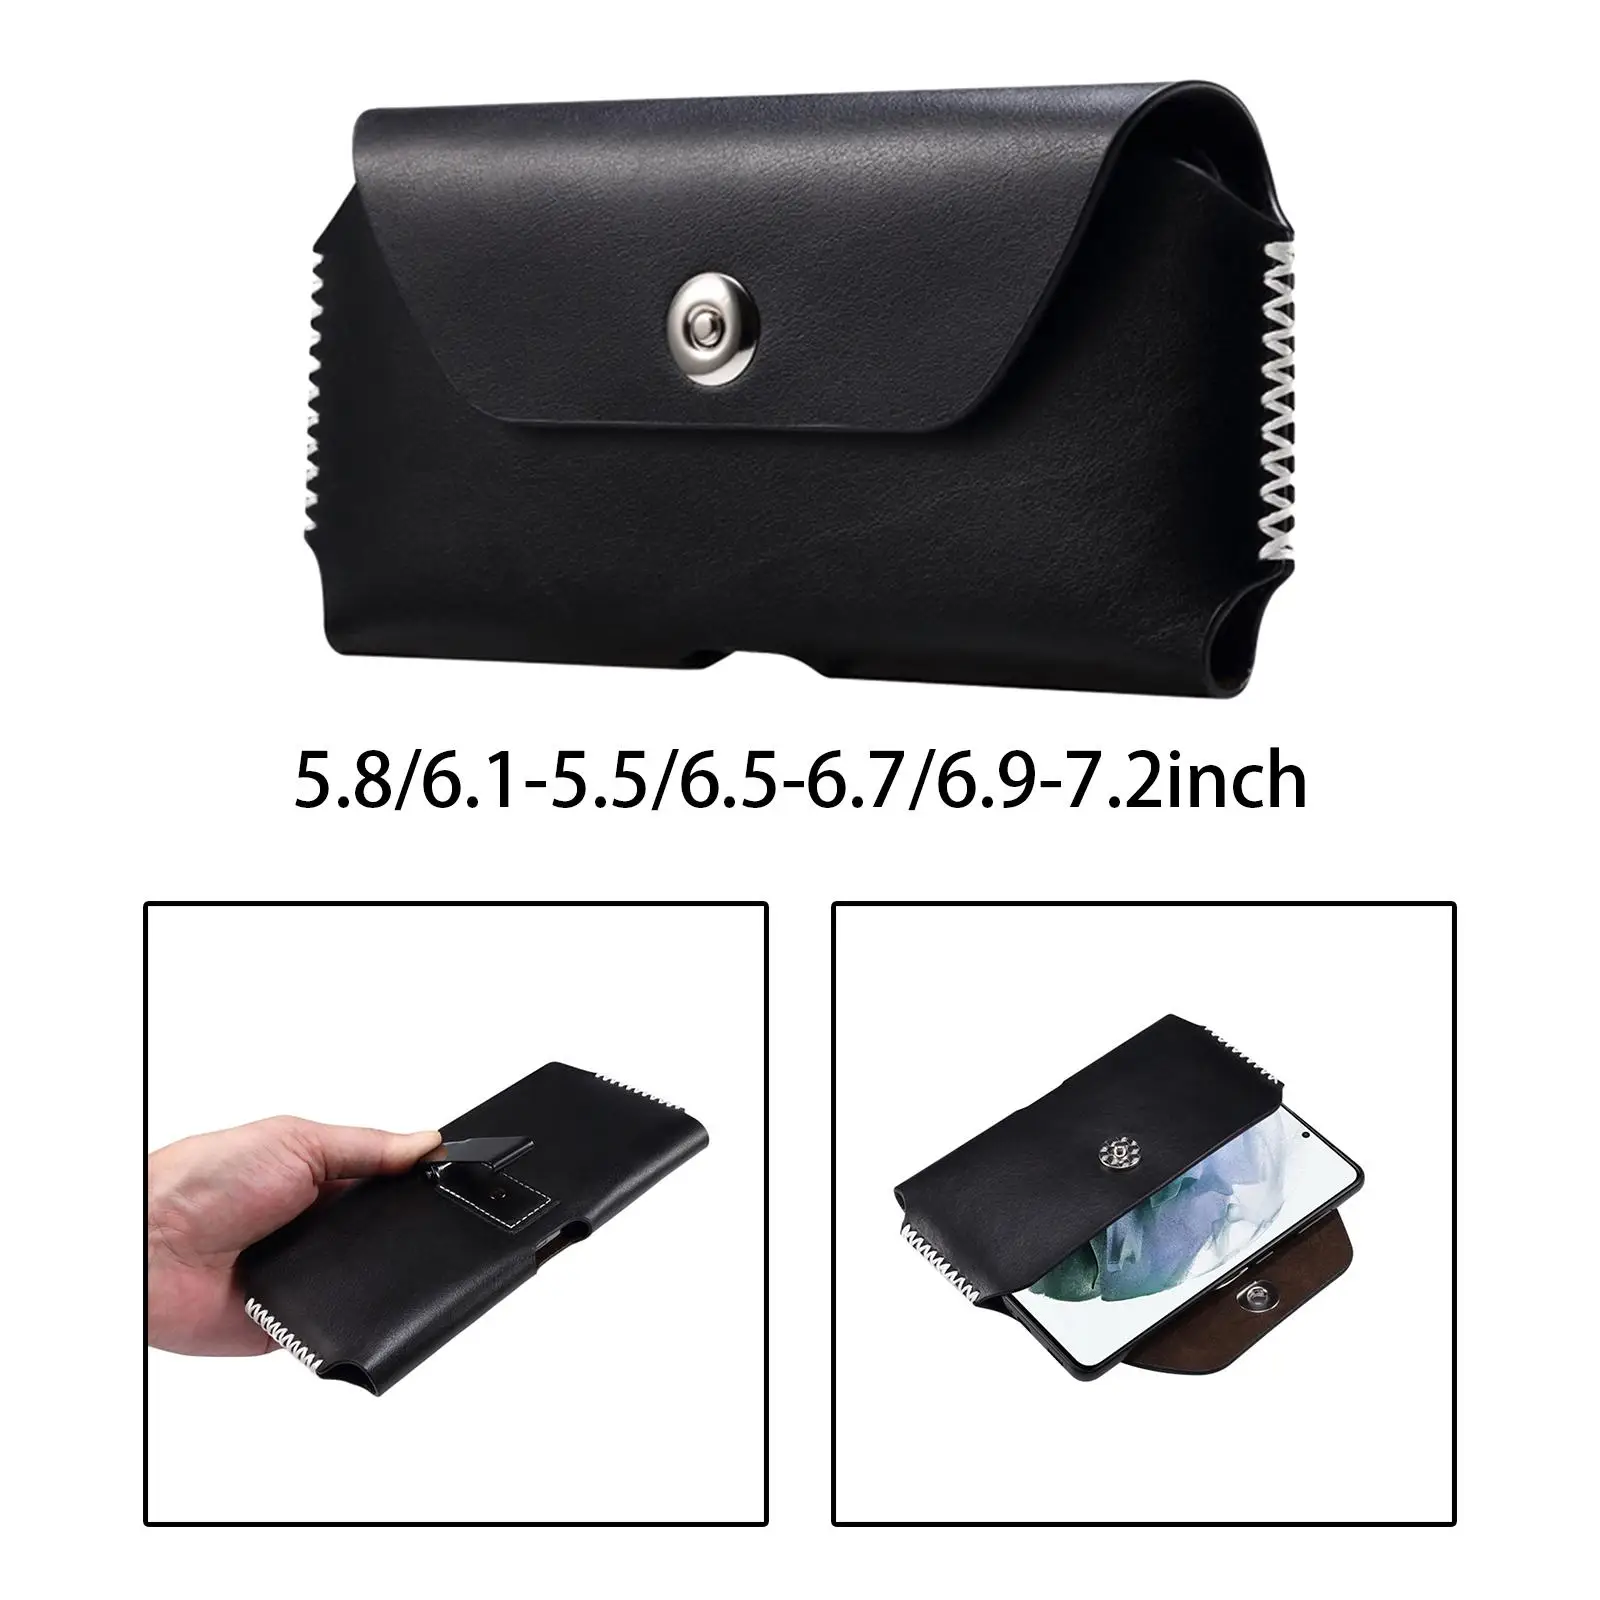 Slim PU Leather Belt Pouch for Phone Waist Bag Splash Proof Outdoor Holster Belt Bag Men Gift for iOS Android Phones Black